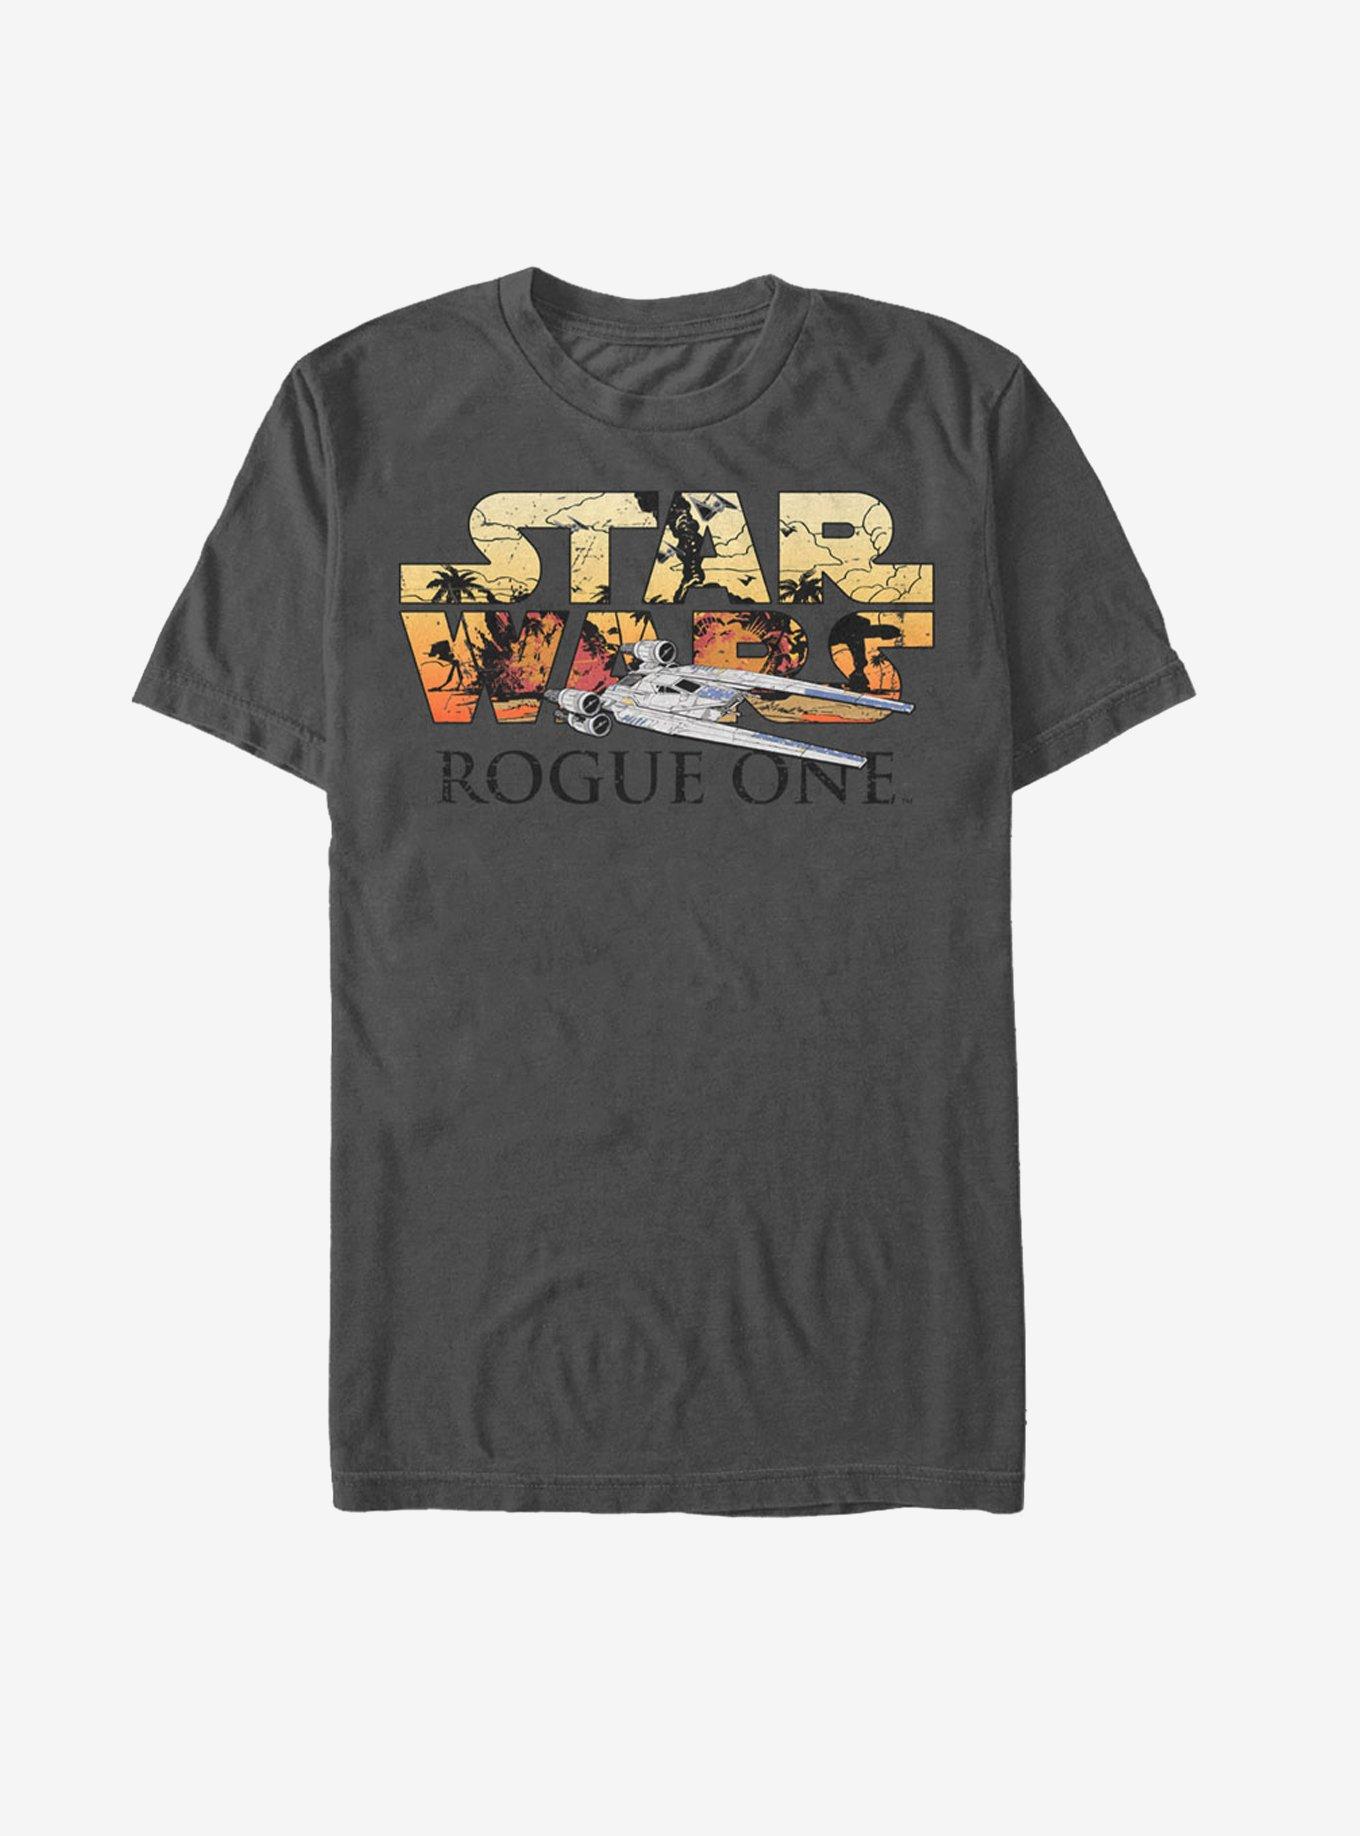 Star Wars Rebel U-Wing Battle Logo T-Shirt, CHARCOAL, hi-res